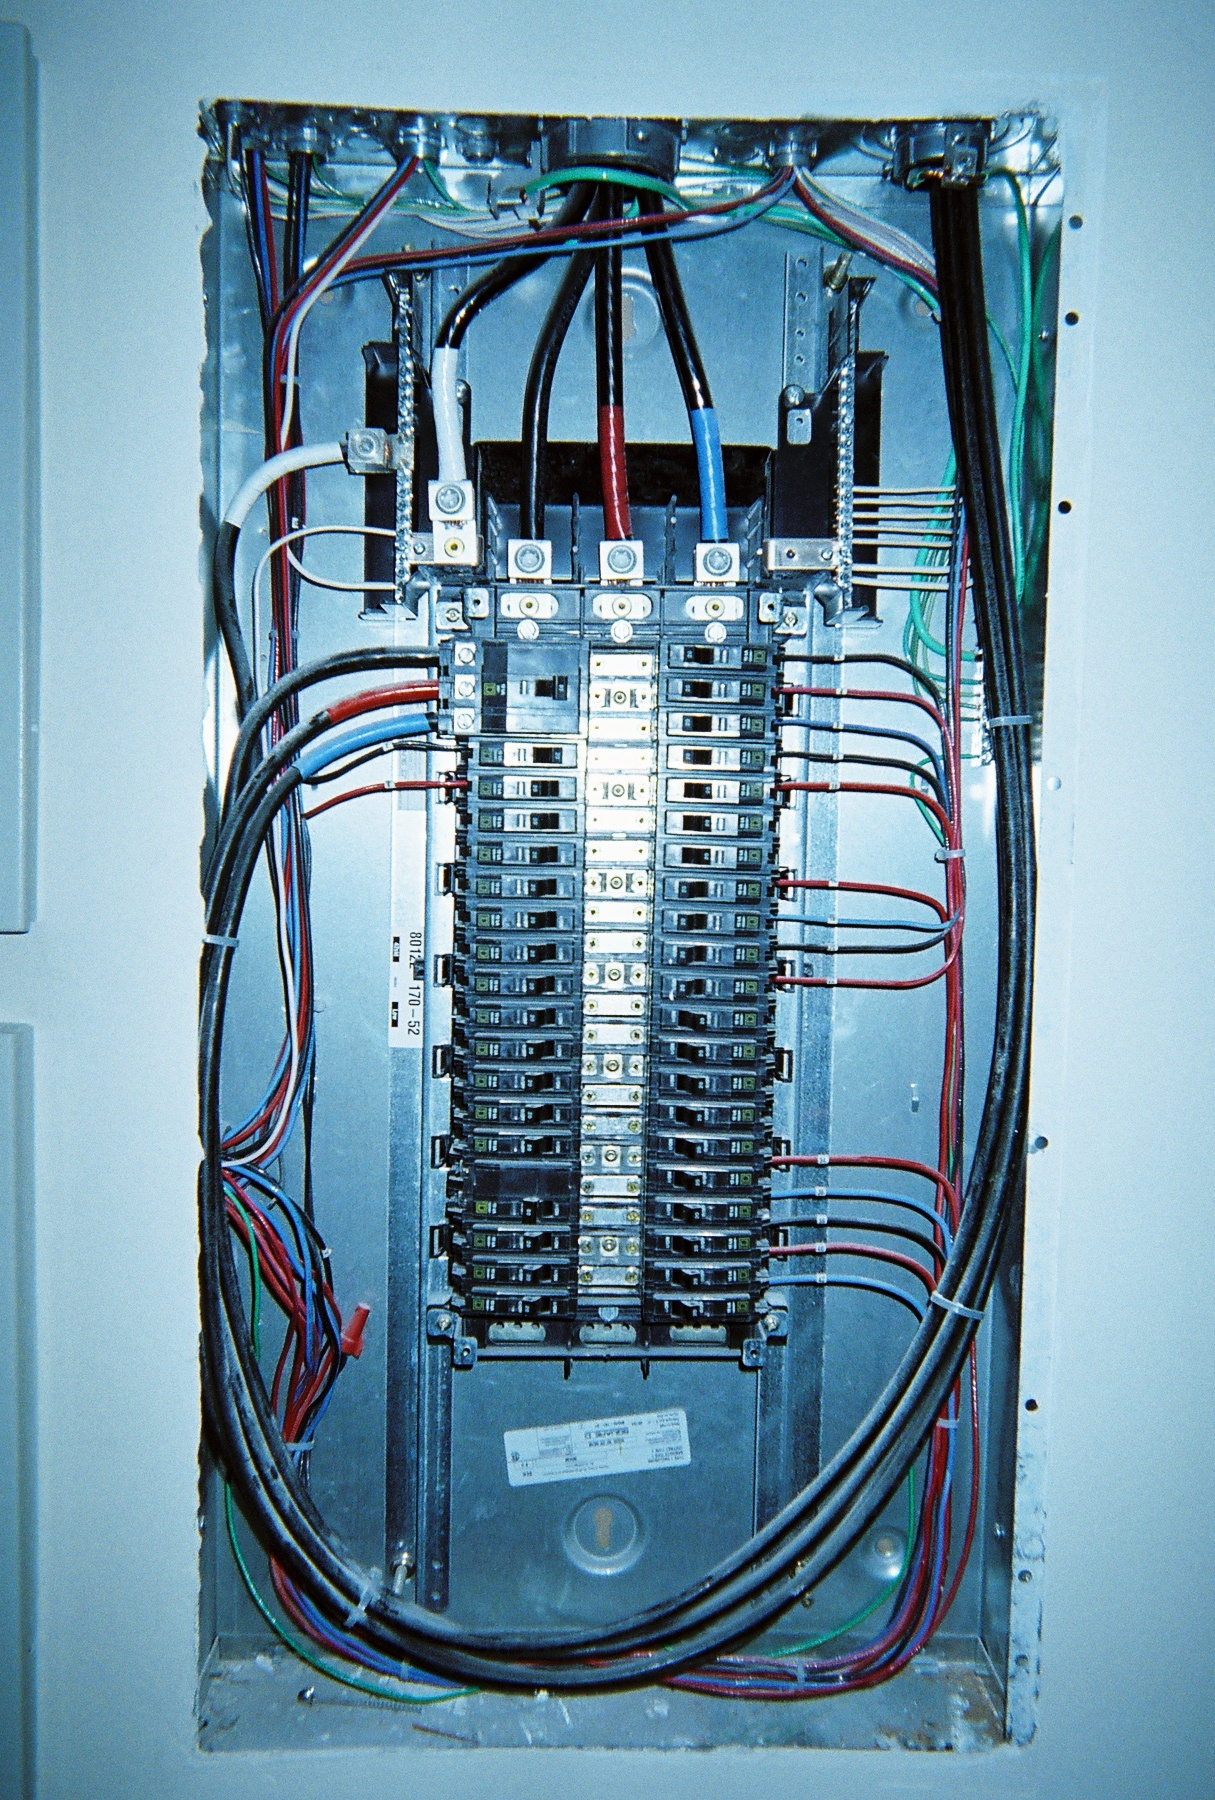 Electrical Panel Repair or Replacement – Website